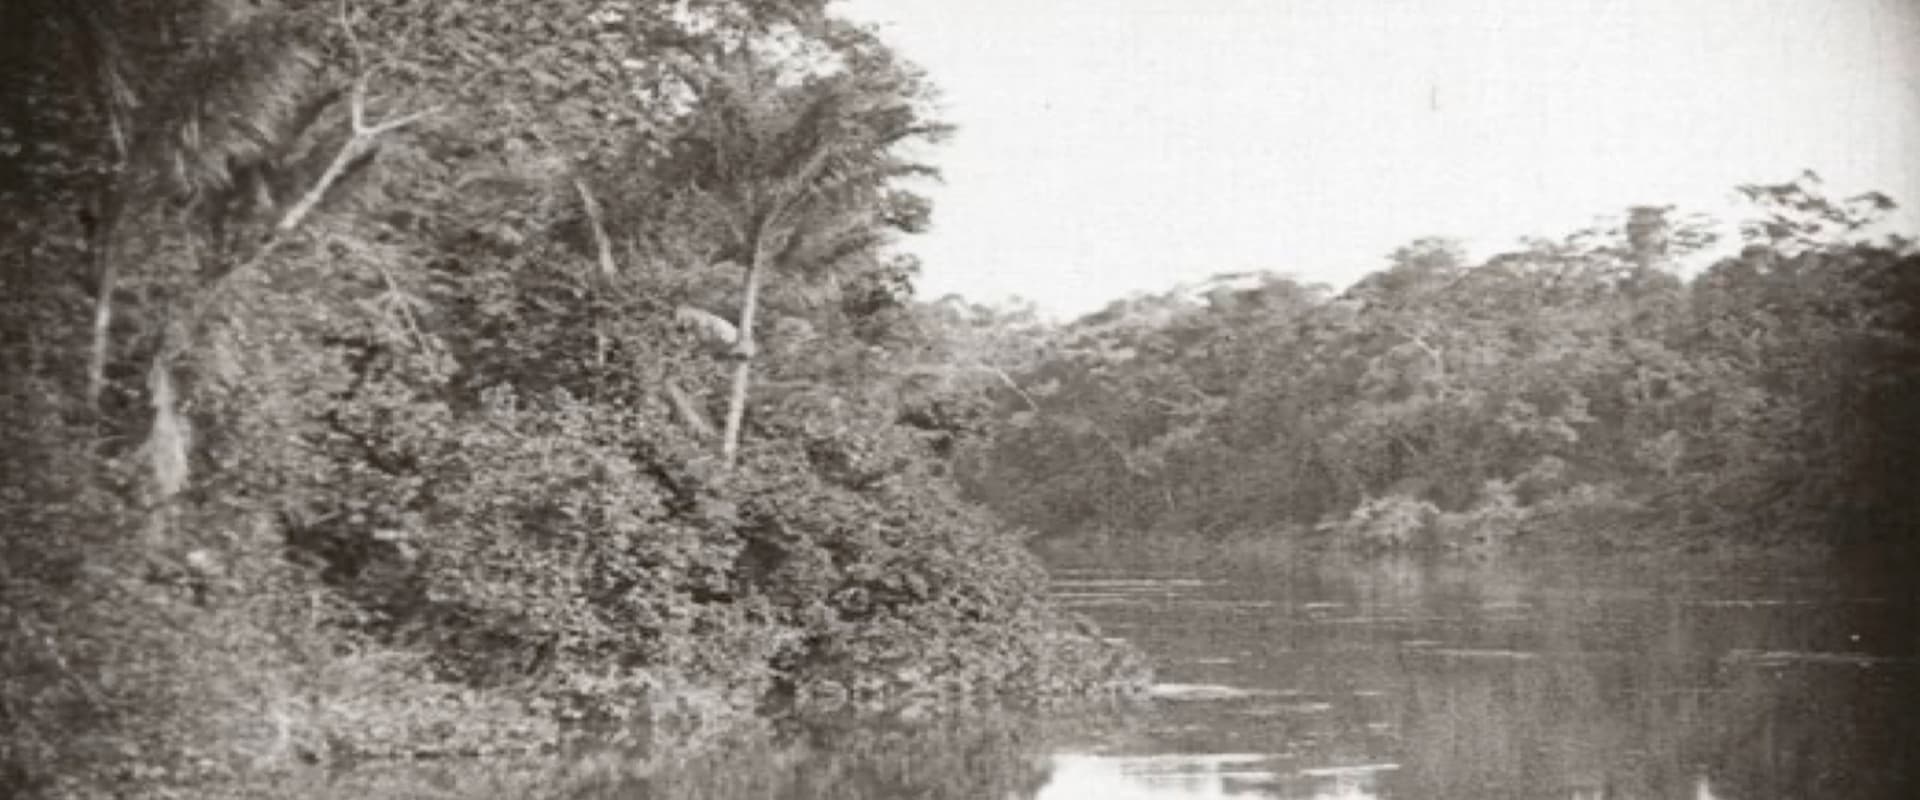 Amazon: Longest River in the World